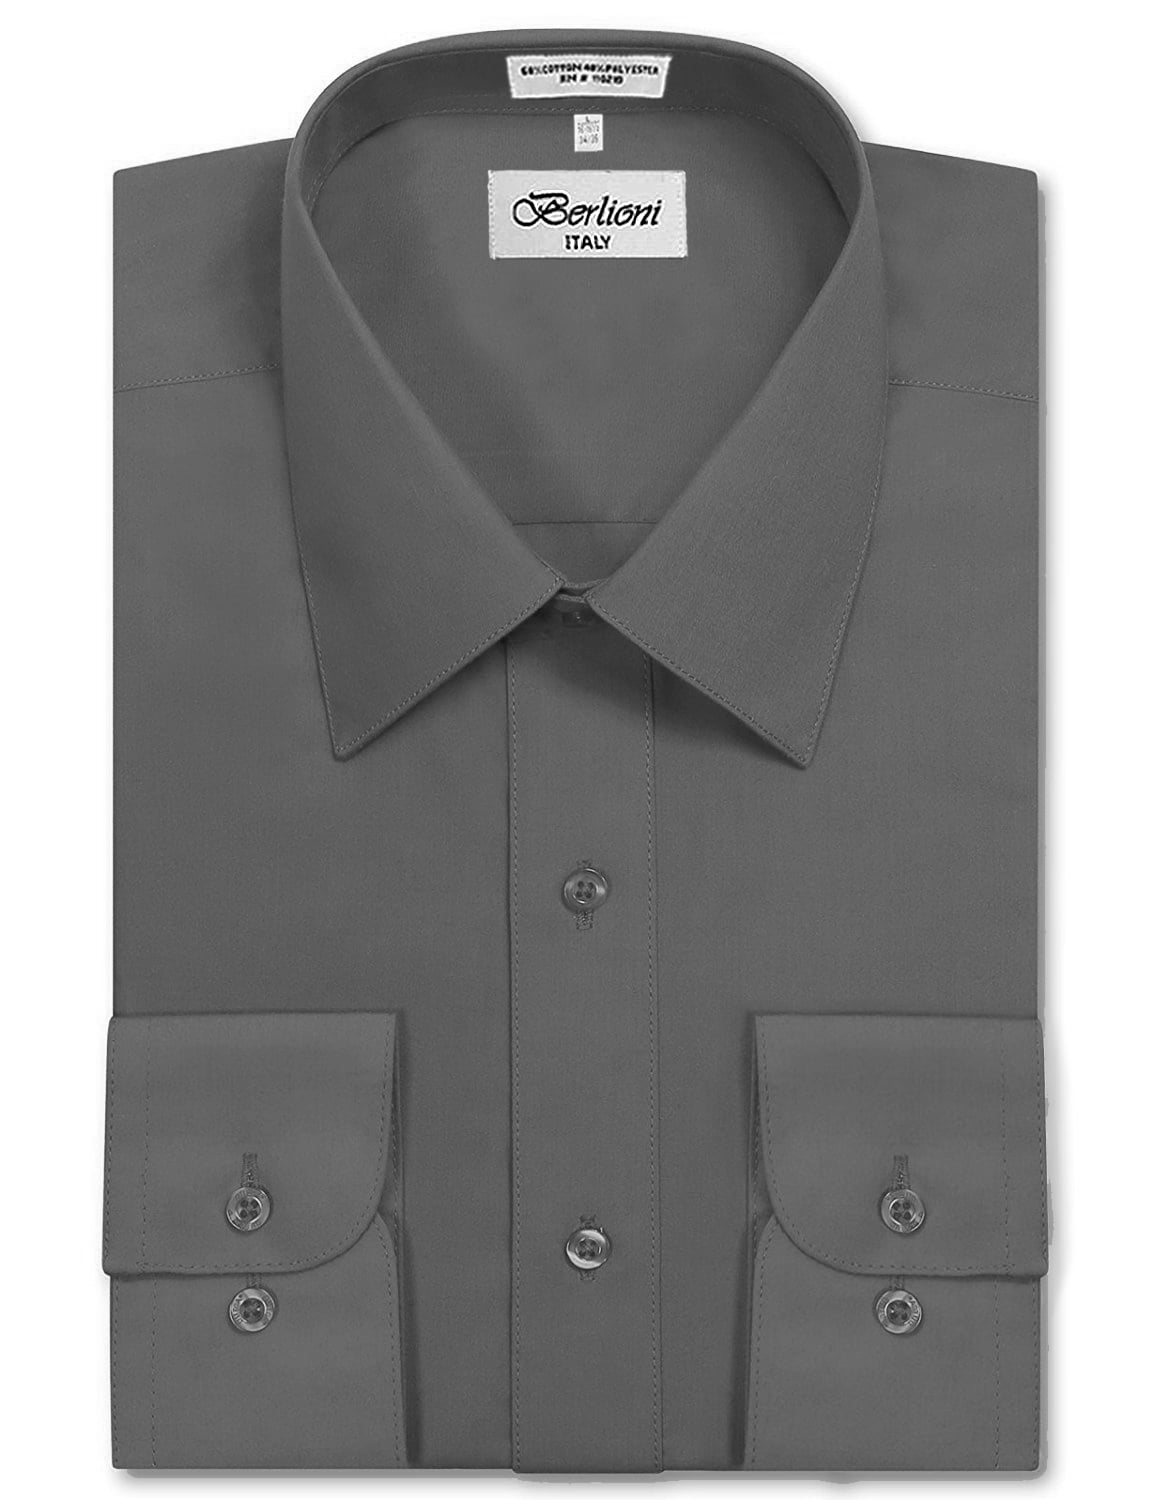 Berlioni Classic Fit Cotton Blend Solid Gray Dress Shirt 